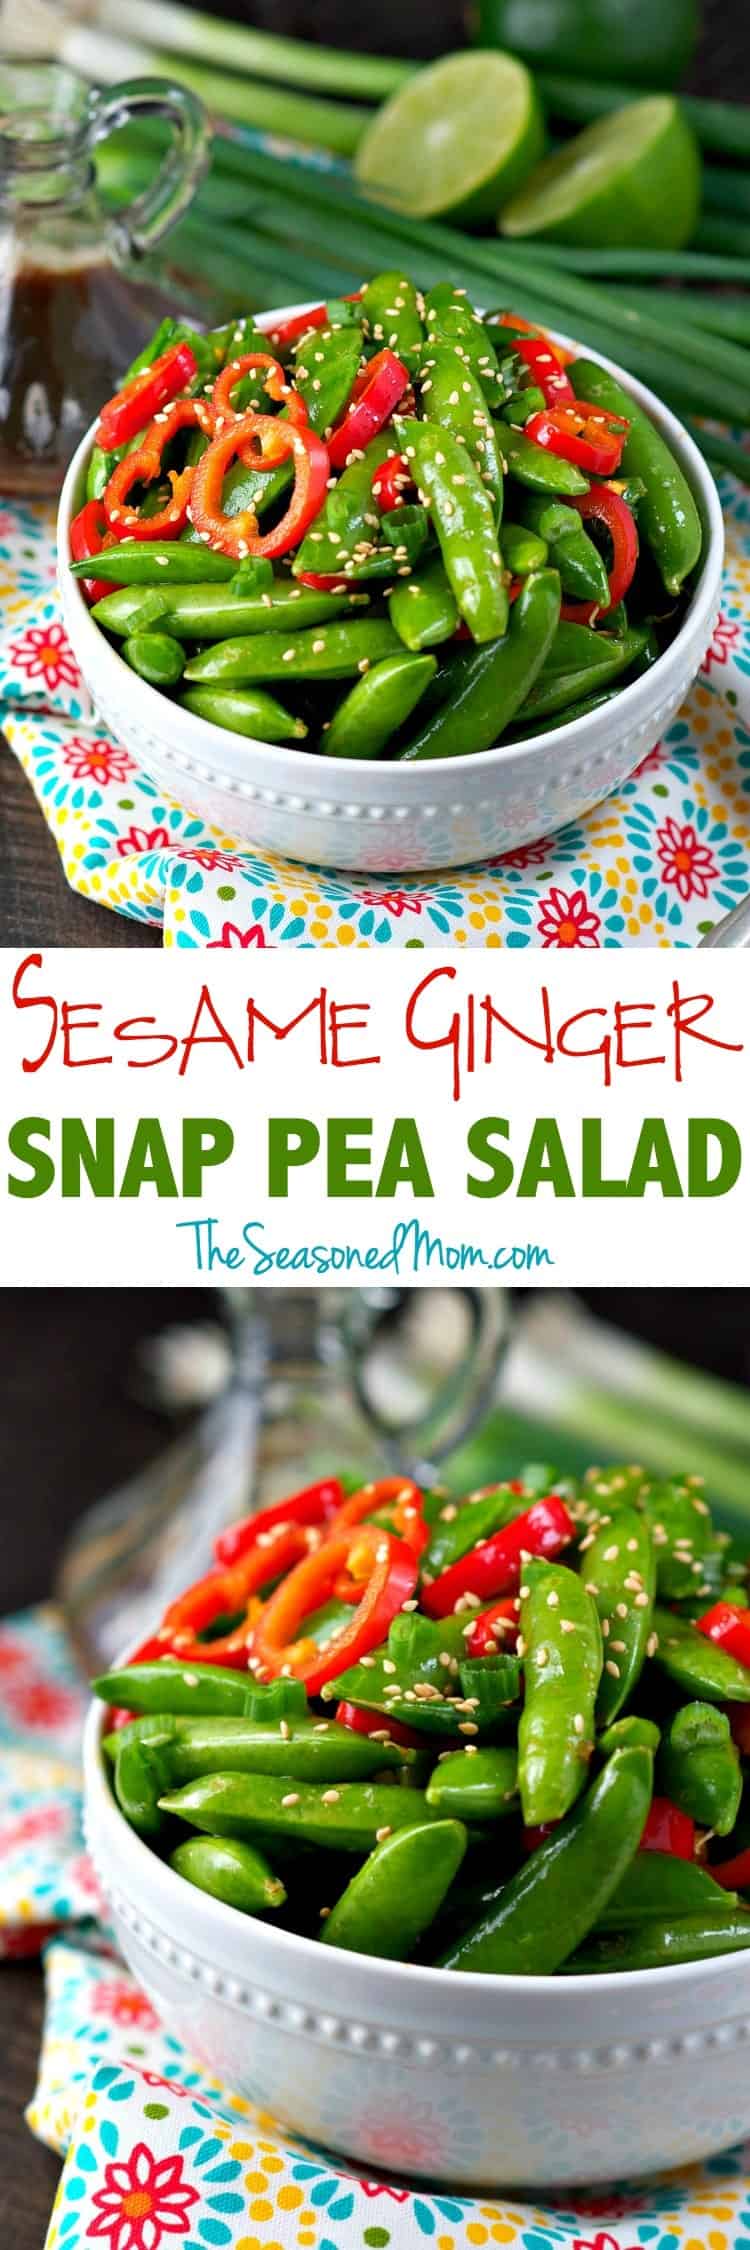 https://www.theseasonedmom.com/wp-content/uploads/2016/04/Sesame-Ginger-Snap-Pea-Salad.jpg